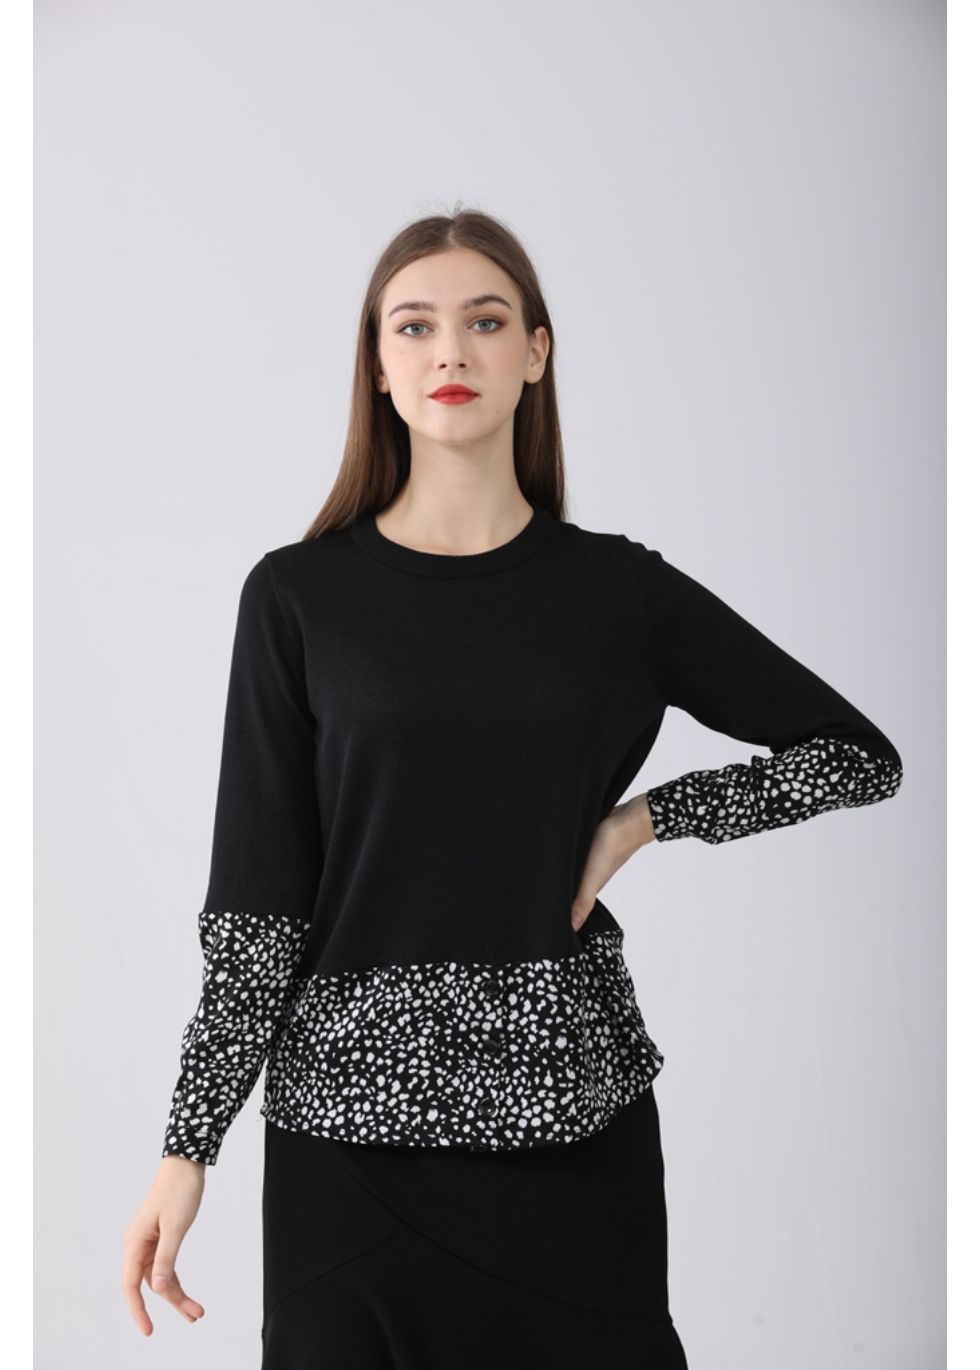 Black Long Sleeve Basic Sweater Top - alamaud